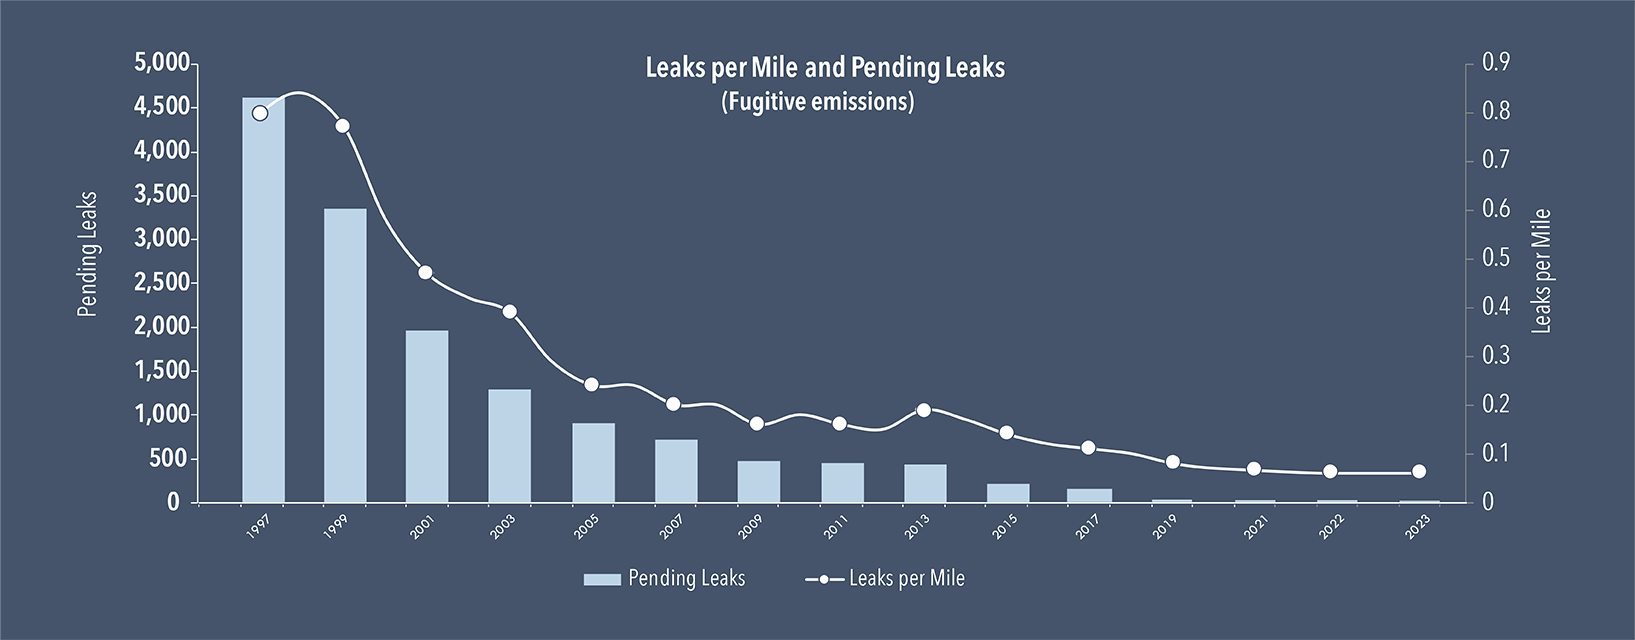 Leaks per Mile graph